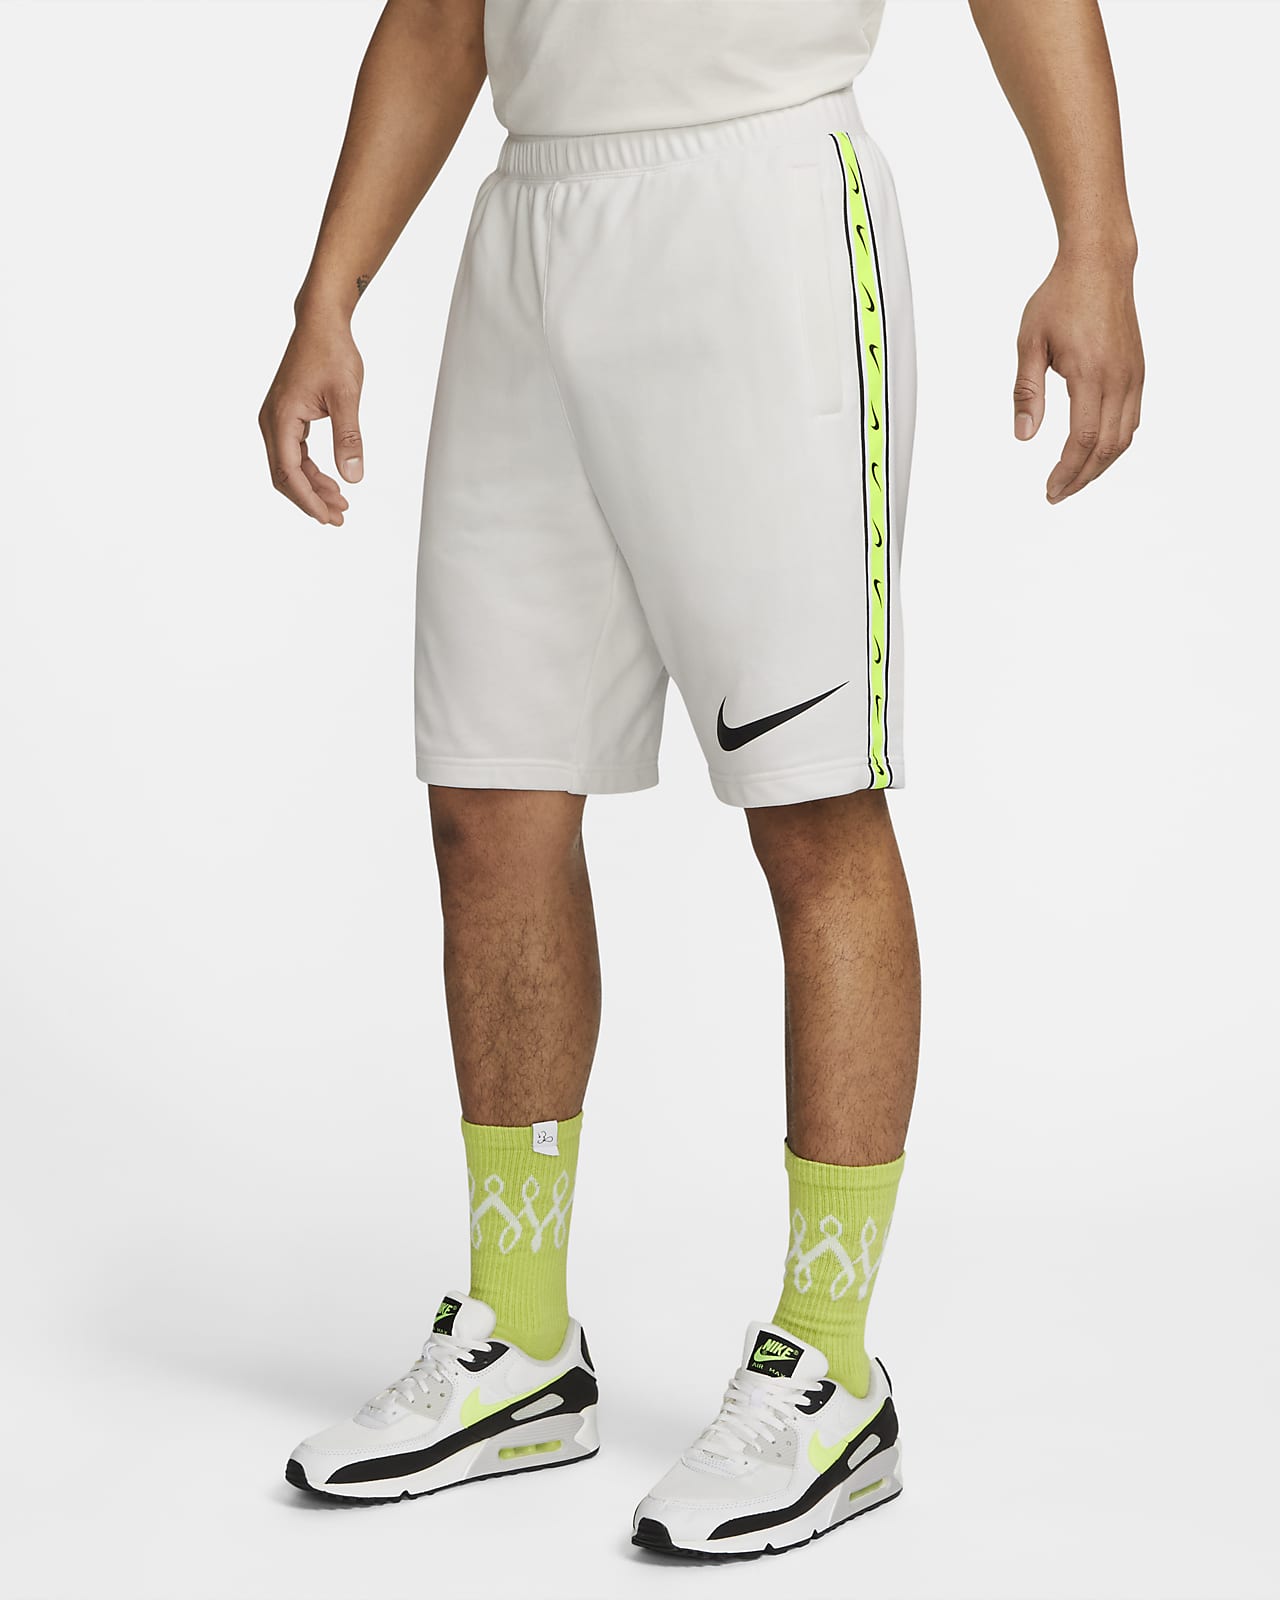 Nike Sportswear herenshorts van sweatstof met herhaald patroon